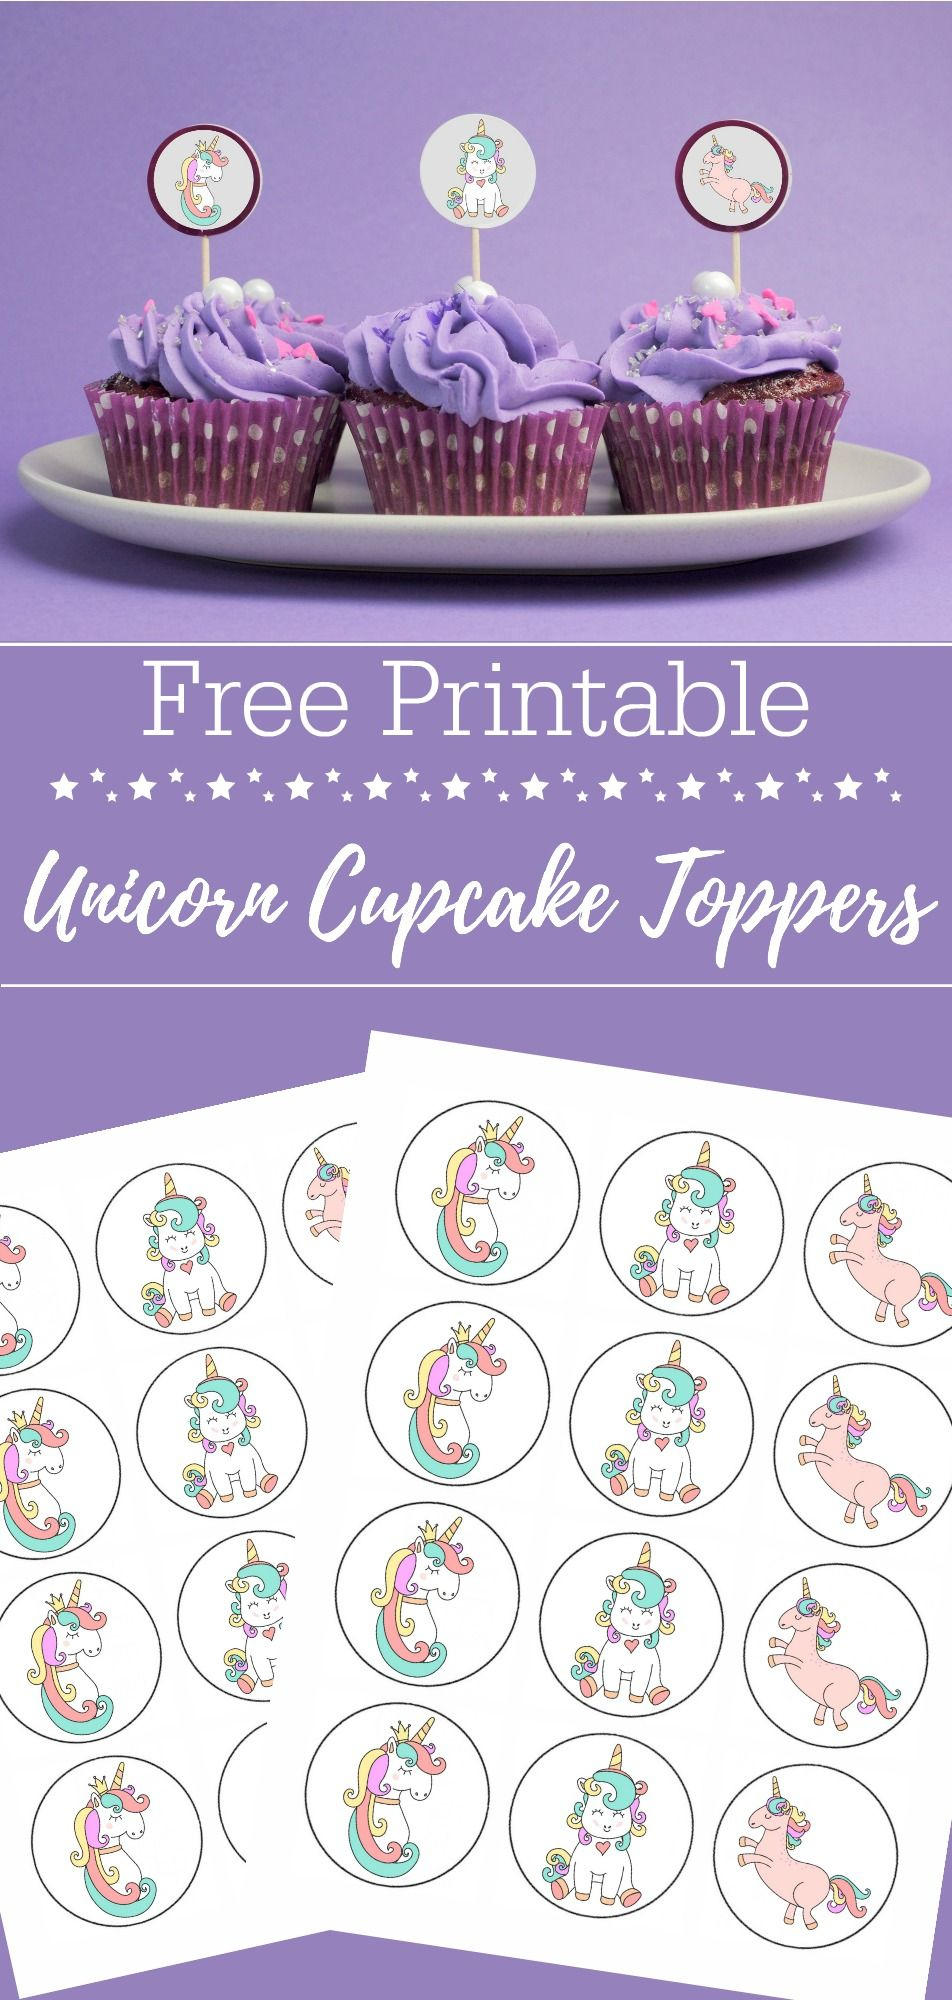 Free Printable Unicorn Cupcake Toppers | Unicorn Party, Free - Free Printable Cupcake Toppers